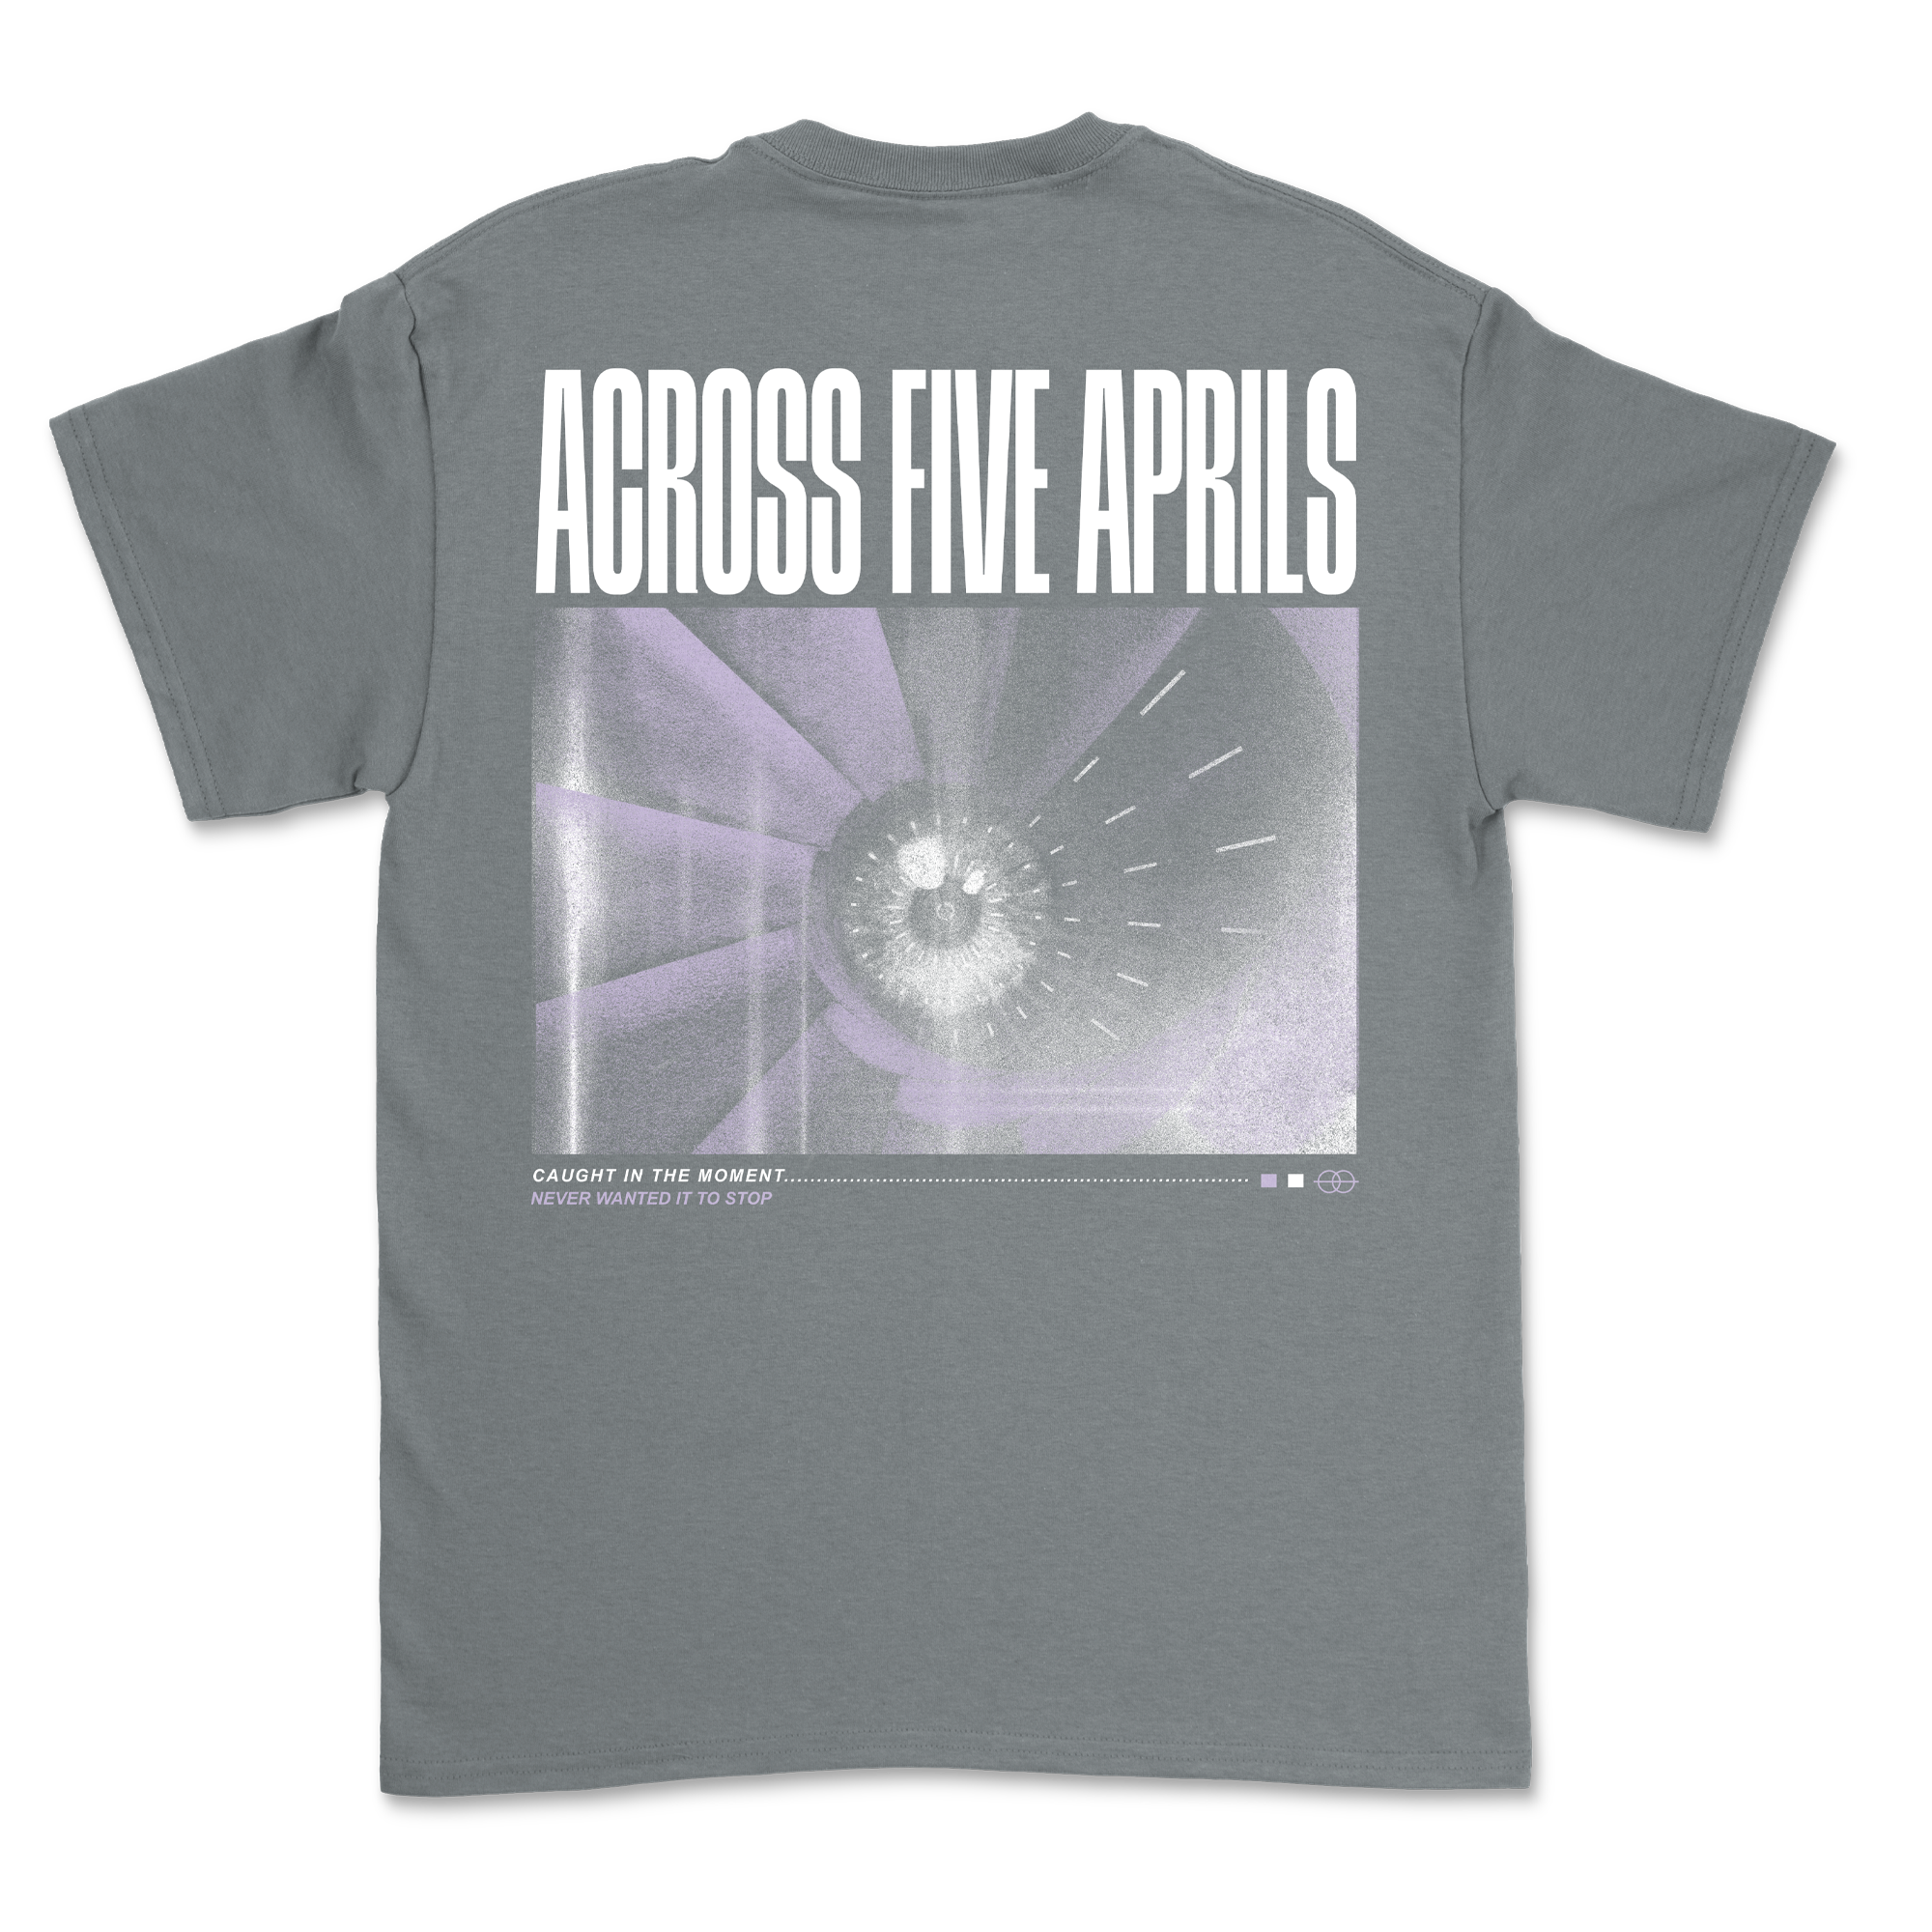 Across Five Aprils - Eye T-Shirt